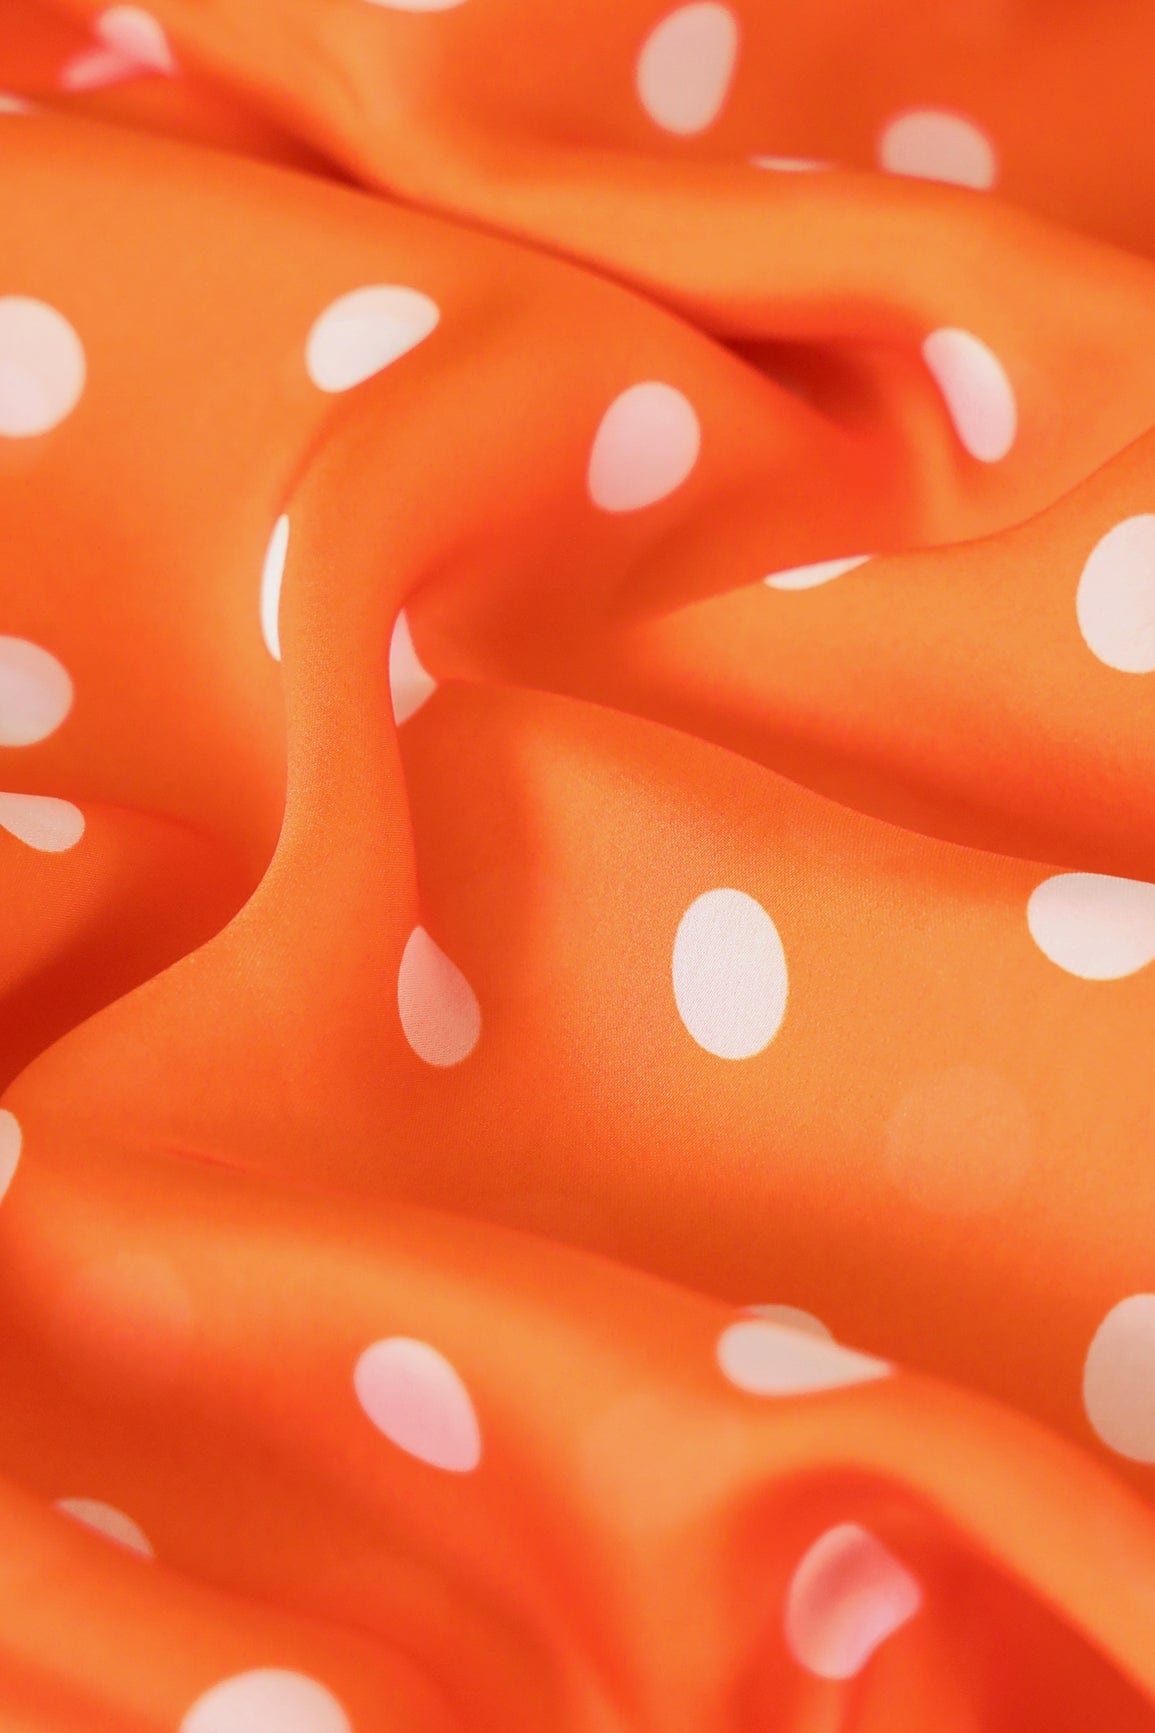 doeraa Prints Orange And White Polka Dots Pattern Digital Print On Georgette Satin Fabric